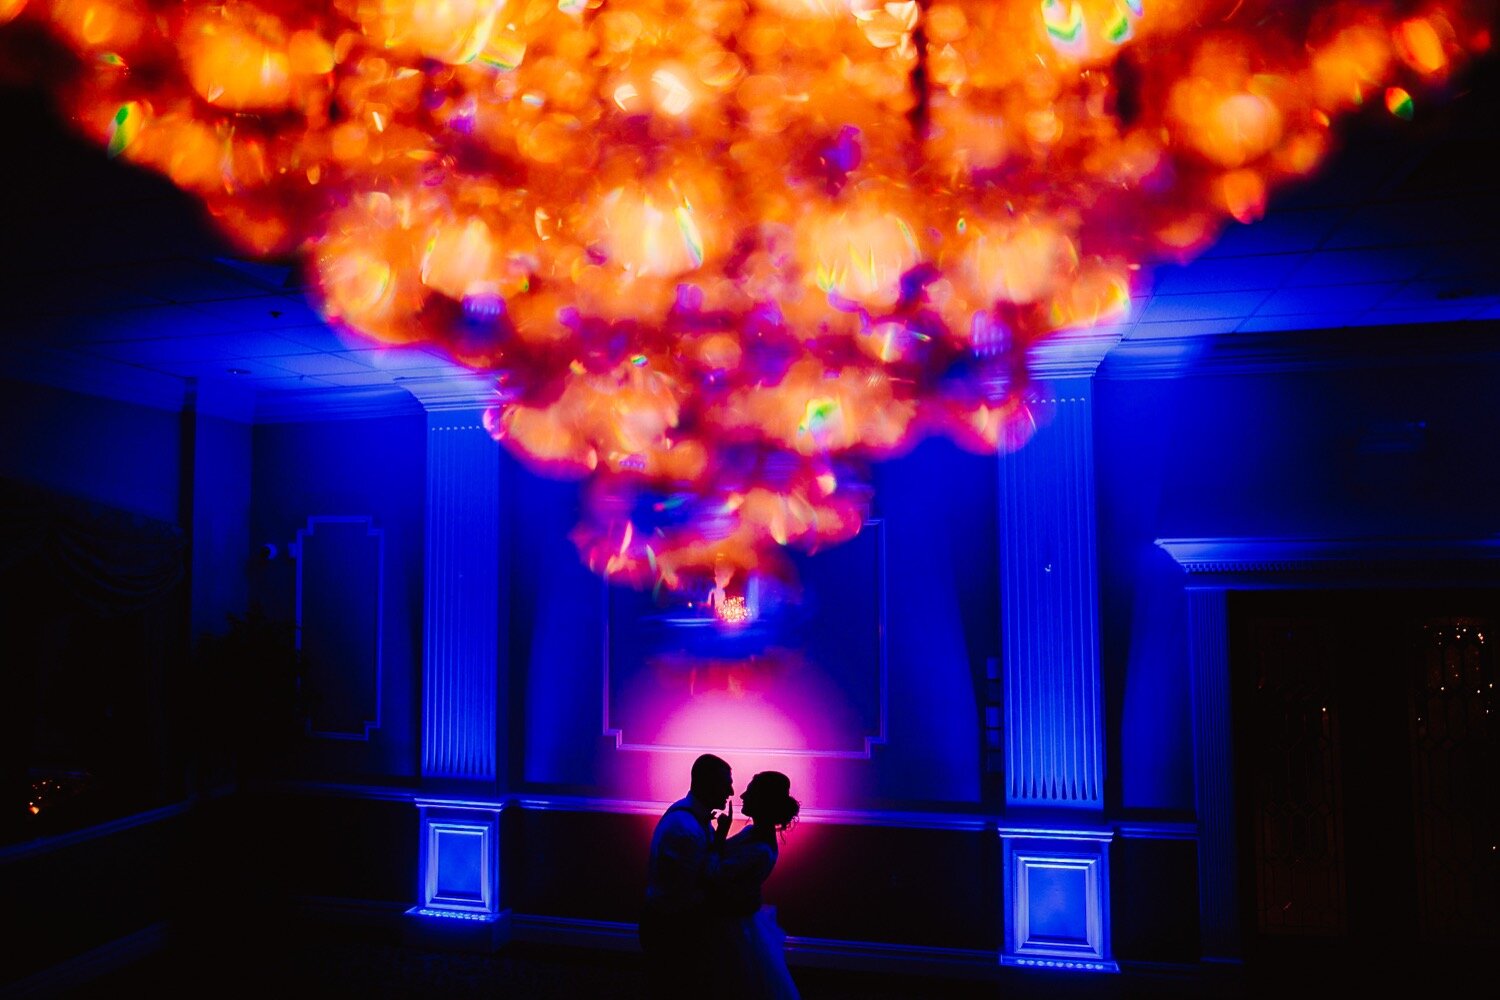 basilica-immaculate-conception-wedding-ceremony-Washington-dc-Waterbury-connecticuit-reception-la-bella-vista-party-photographer-photography-photos-images-inspiration-best.jpg